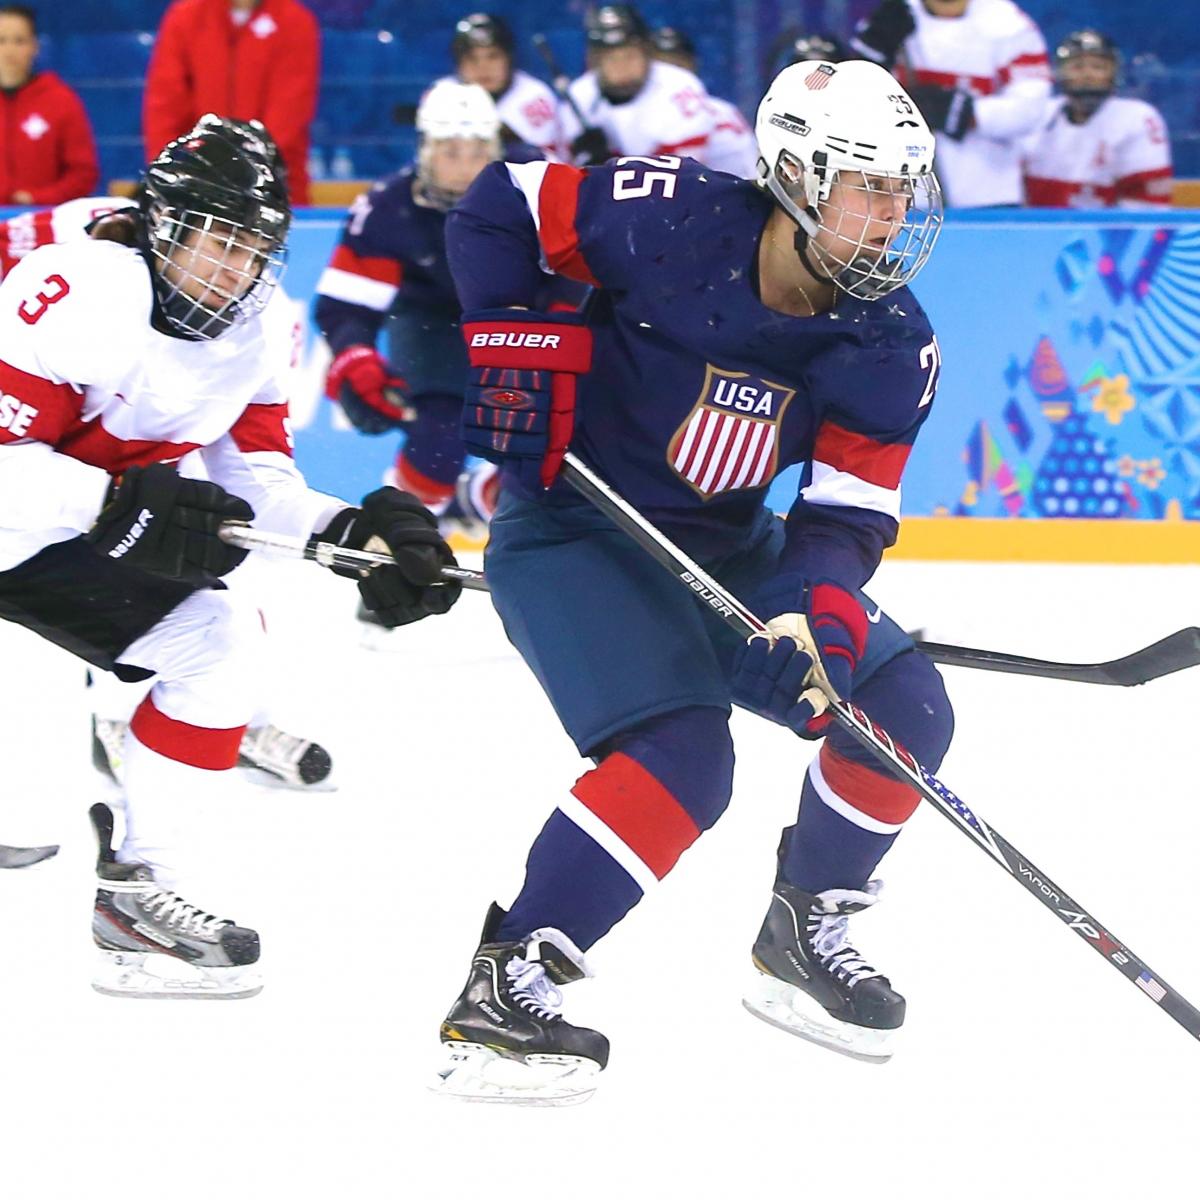 Usa Vs Switzerland Women S Hockey Score And Recap From 2014 Winter Olympics News Scores